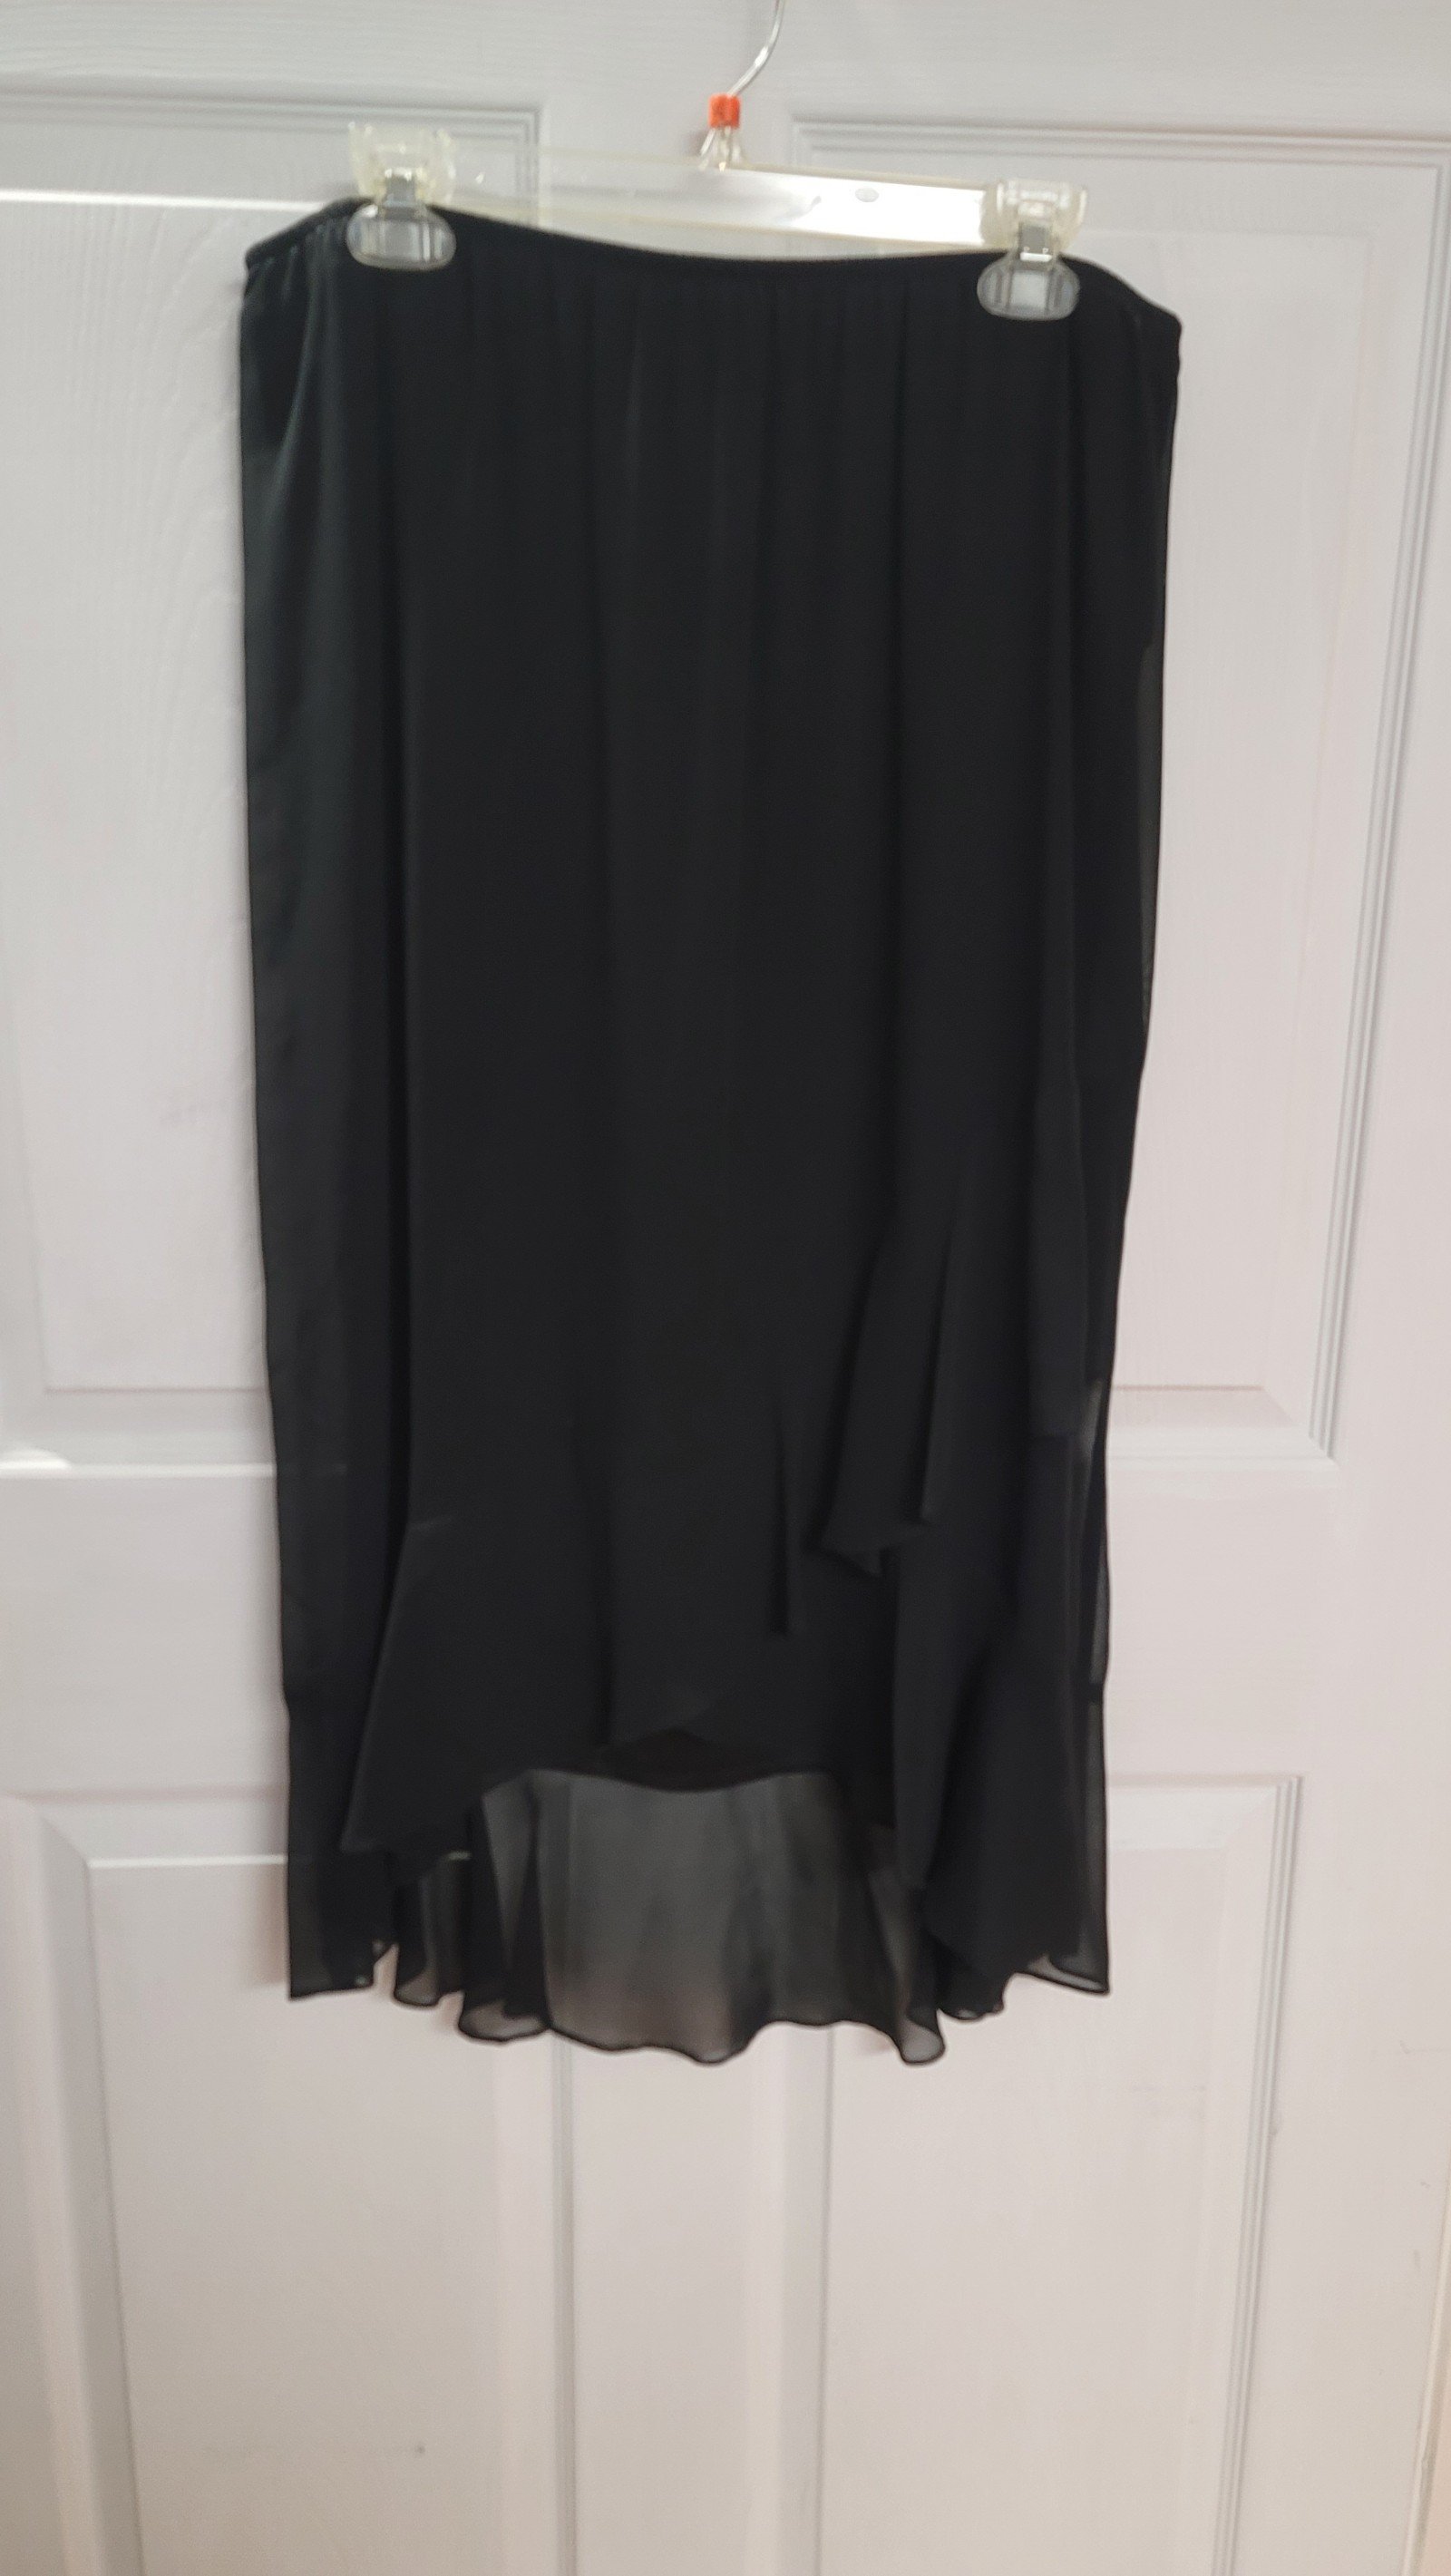 Affordable Womens Dressy Black Skirt oHU526zkb Outlet S